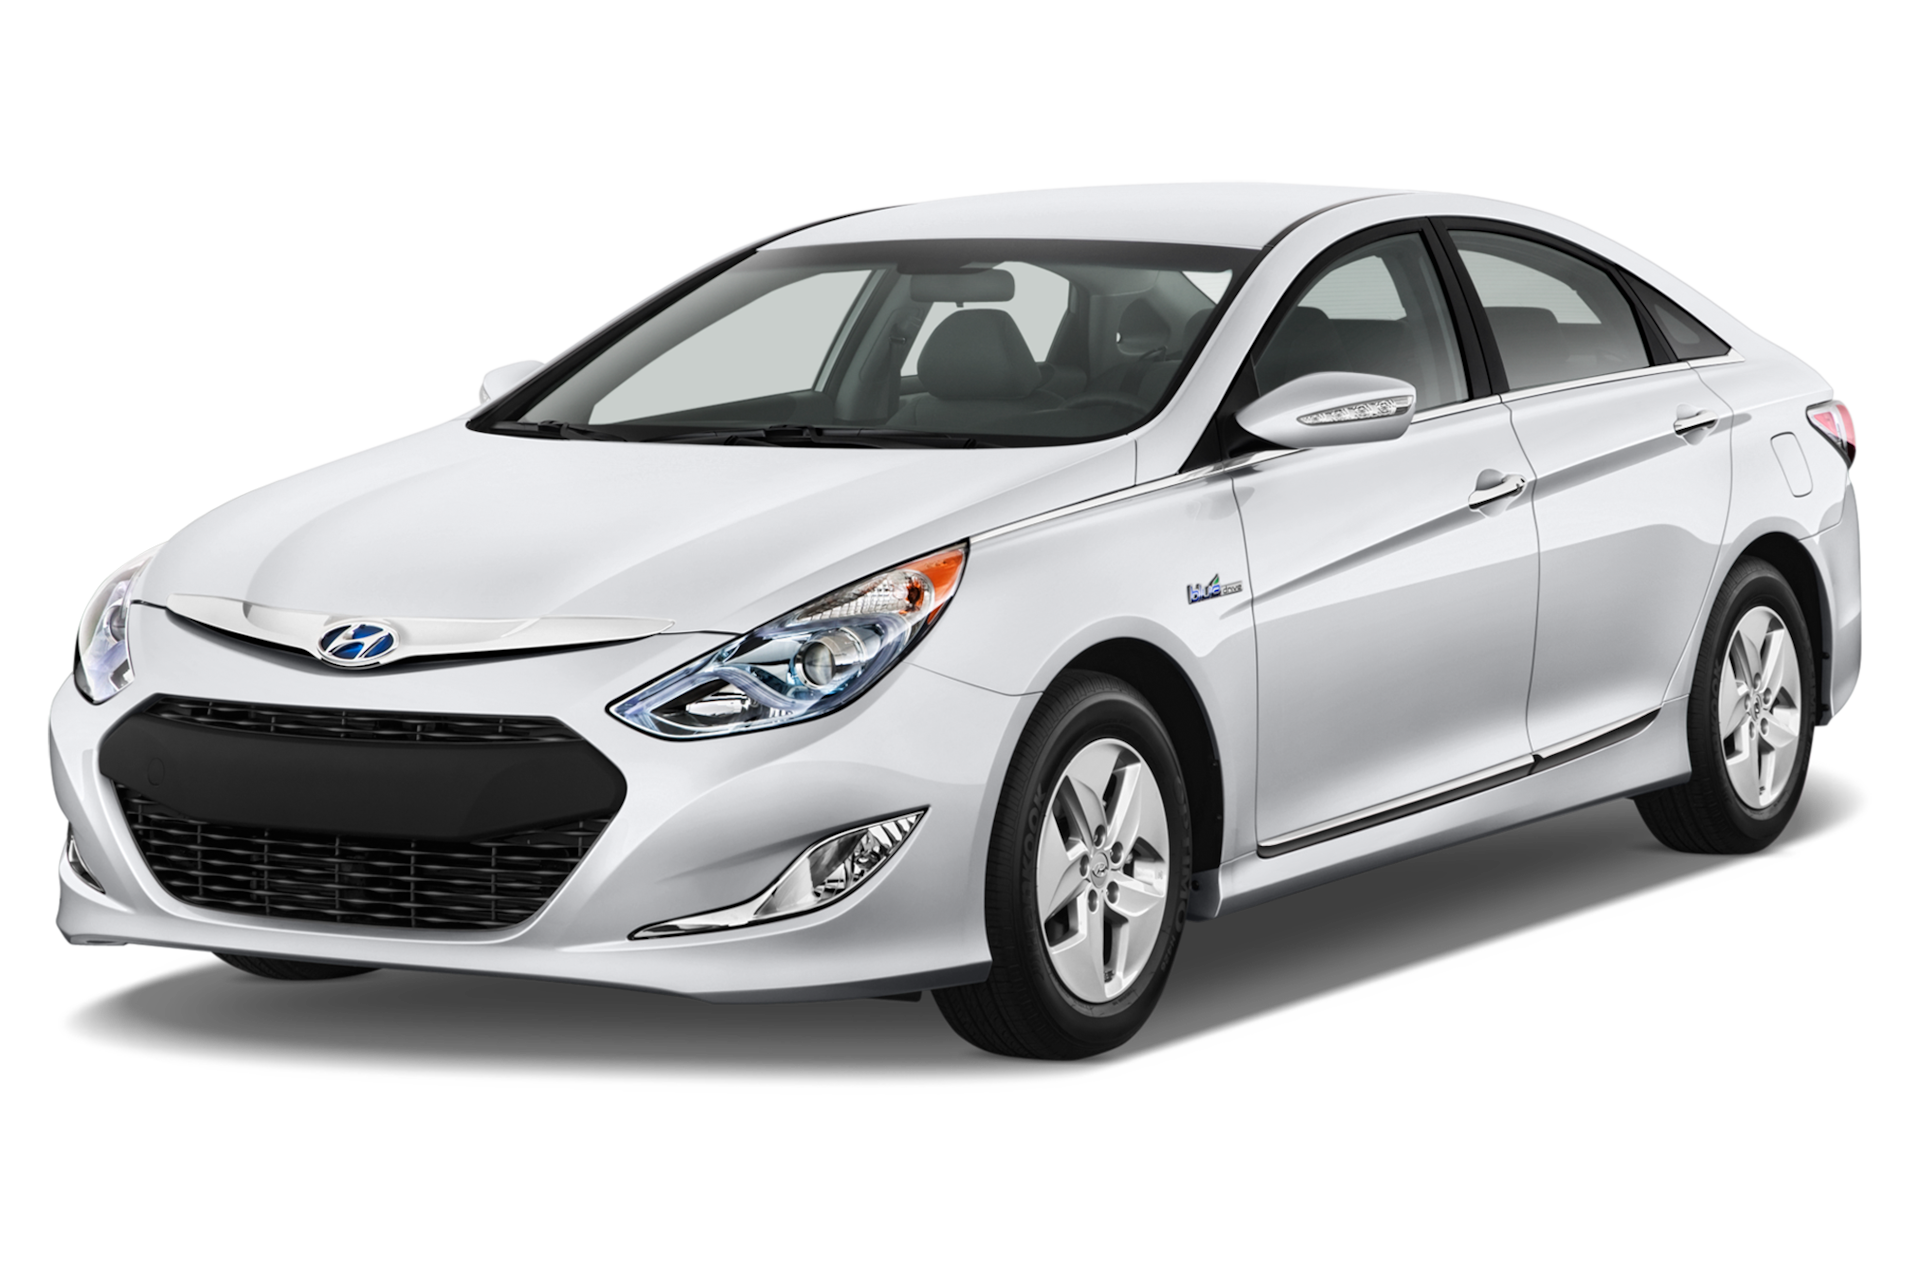 2012 Hyundai Sonata Hybrid Prices, Reviews, and Photos - MotorTrend